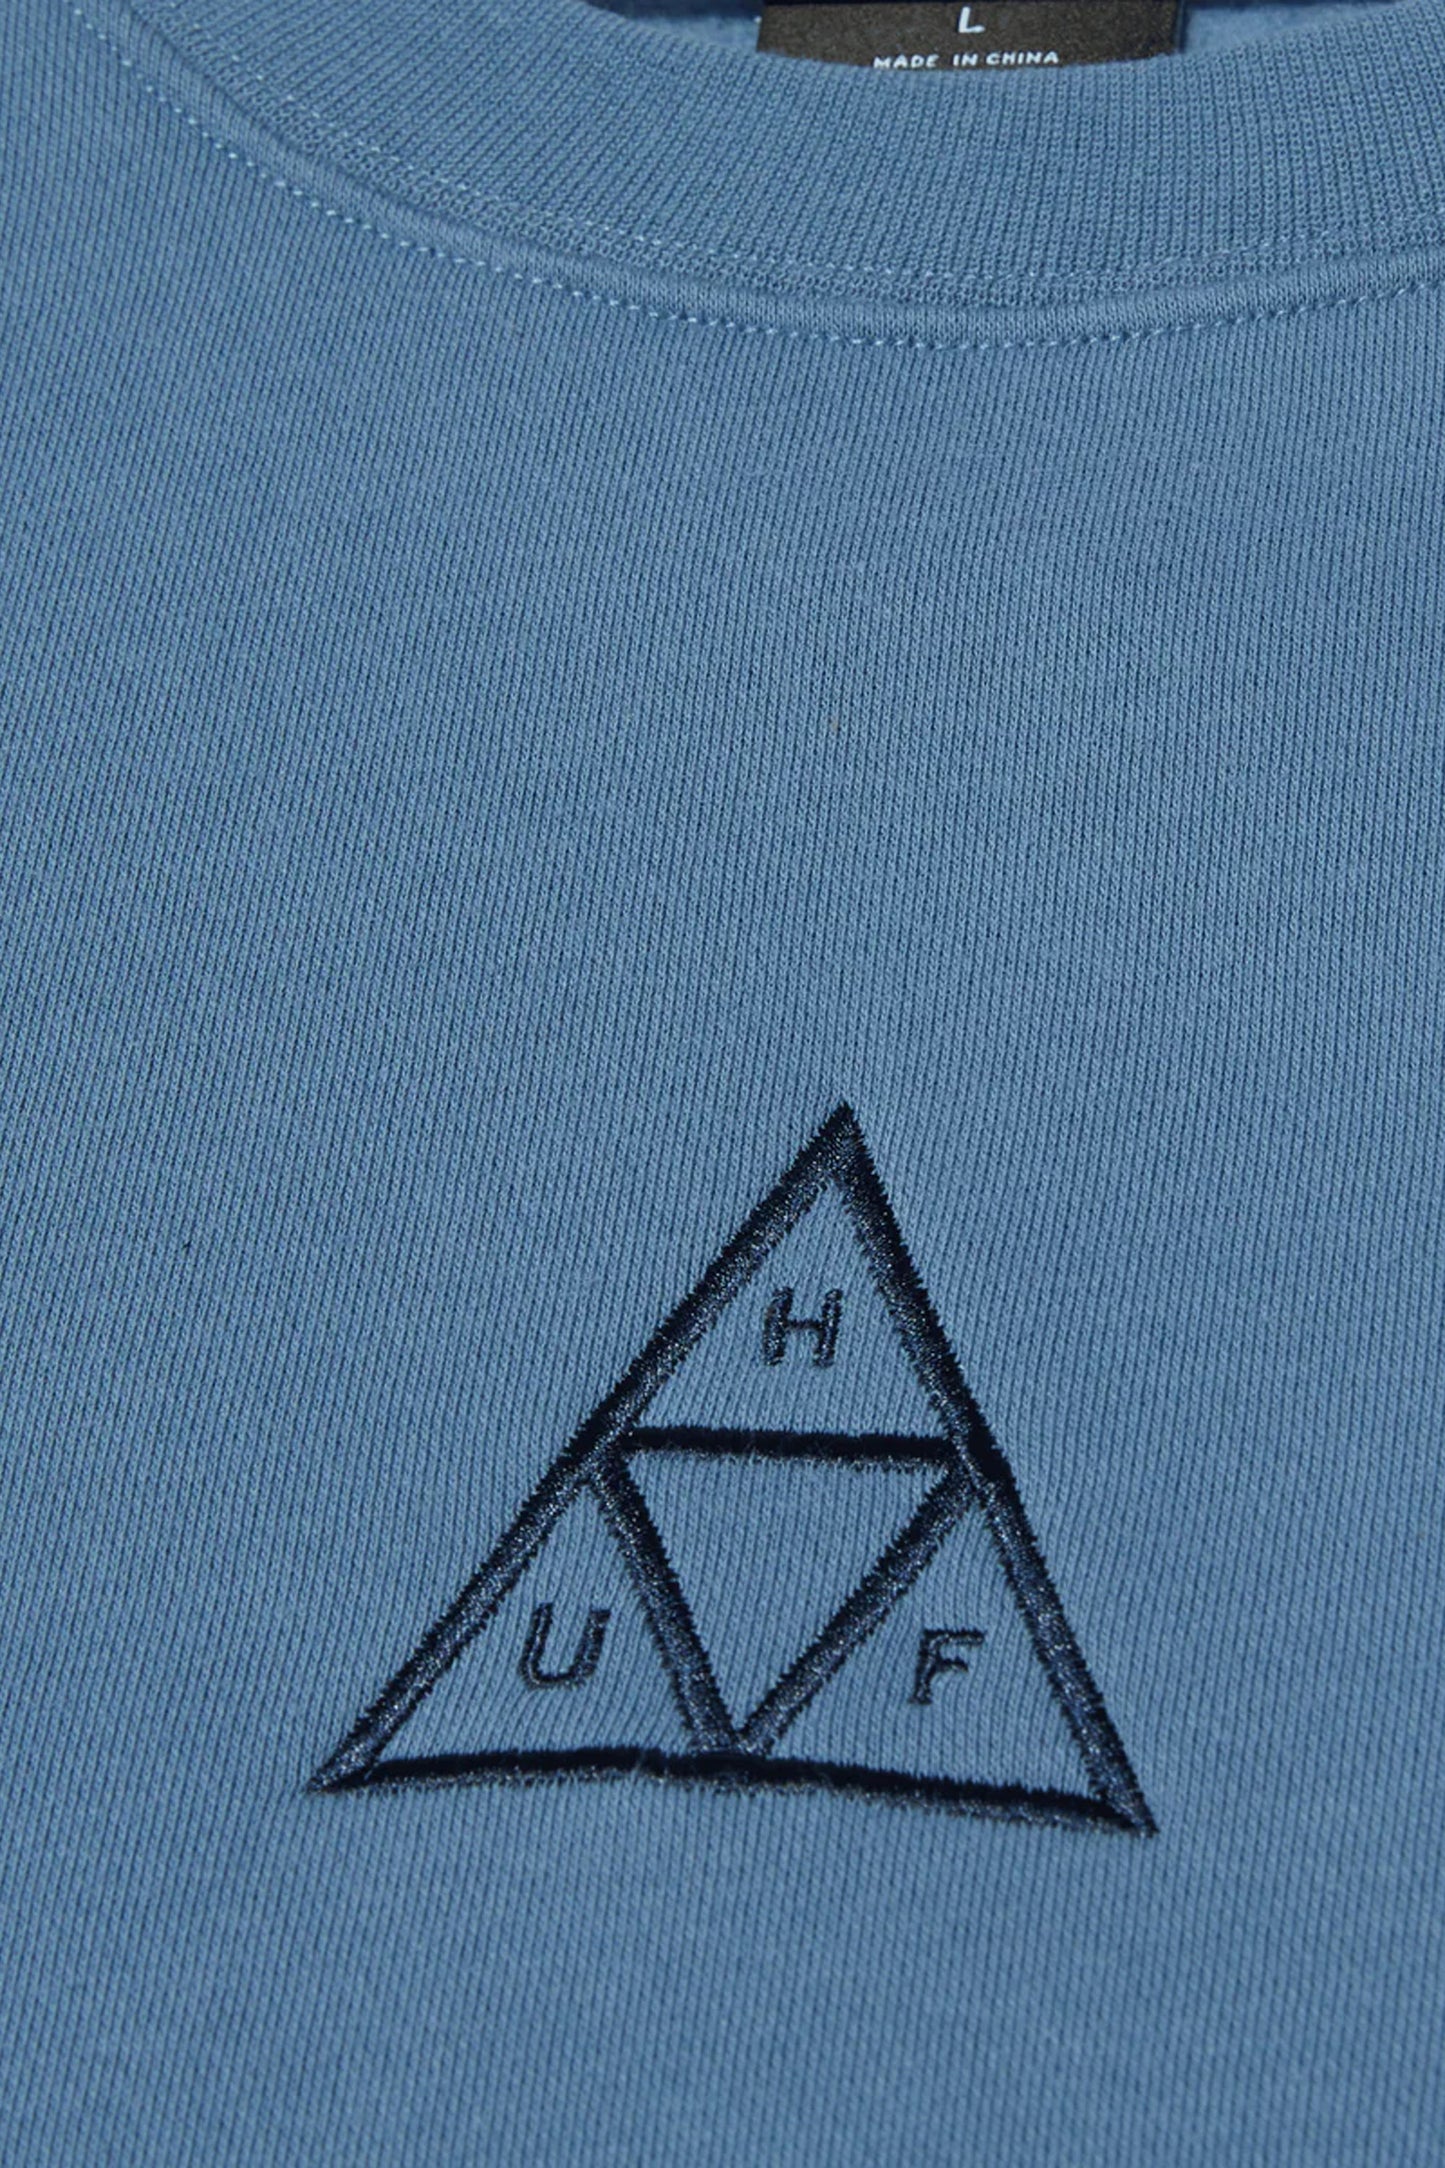 
                  
                    Pukas-Surf-Shop-man-sweater-HUF-set-triangle-crewneck
                  
                